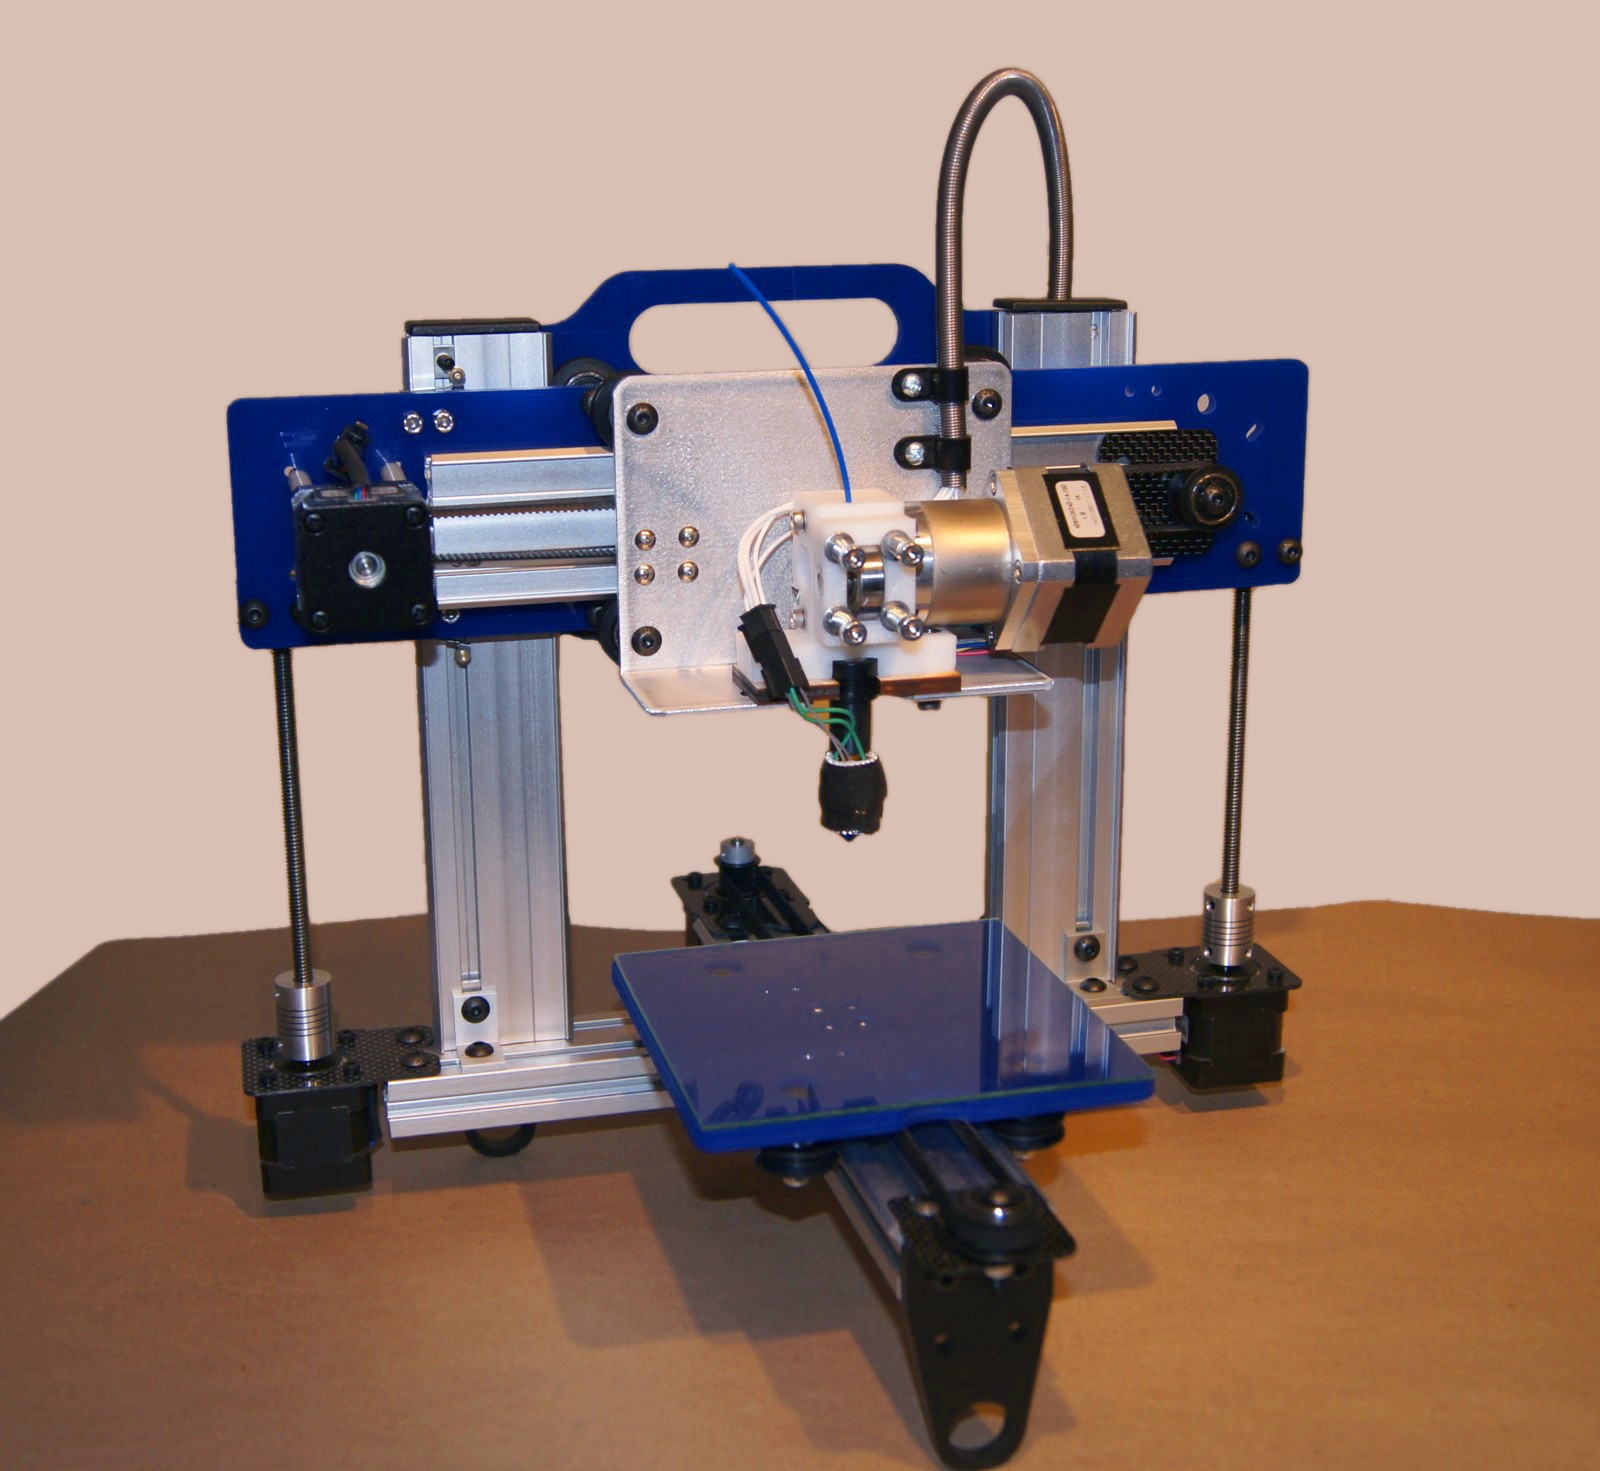 3D printing - Wikipedia, the free encyclopedia